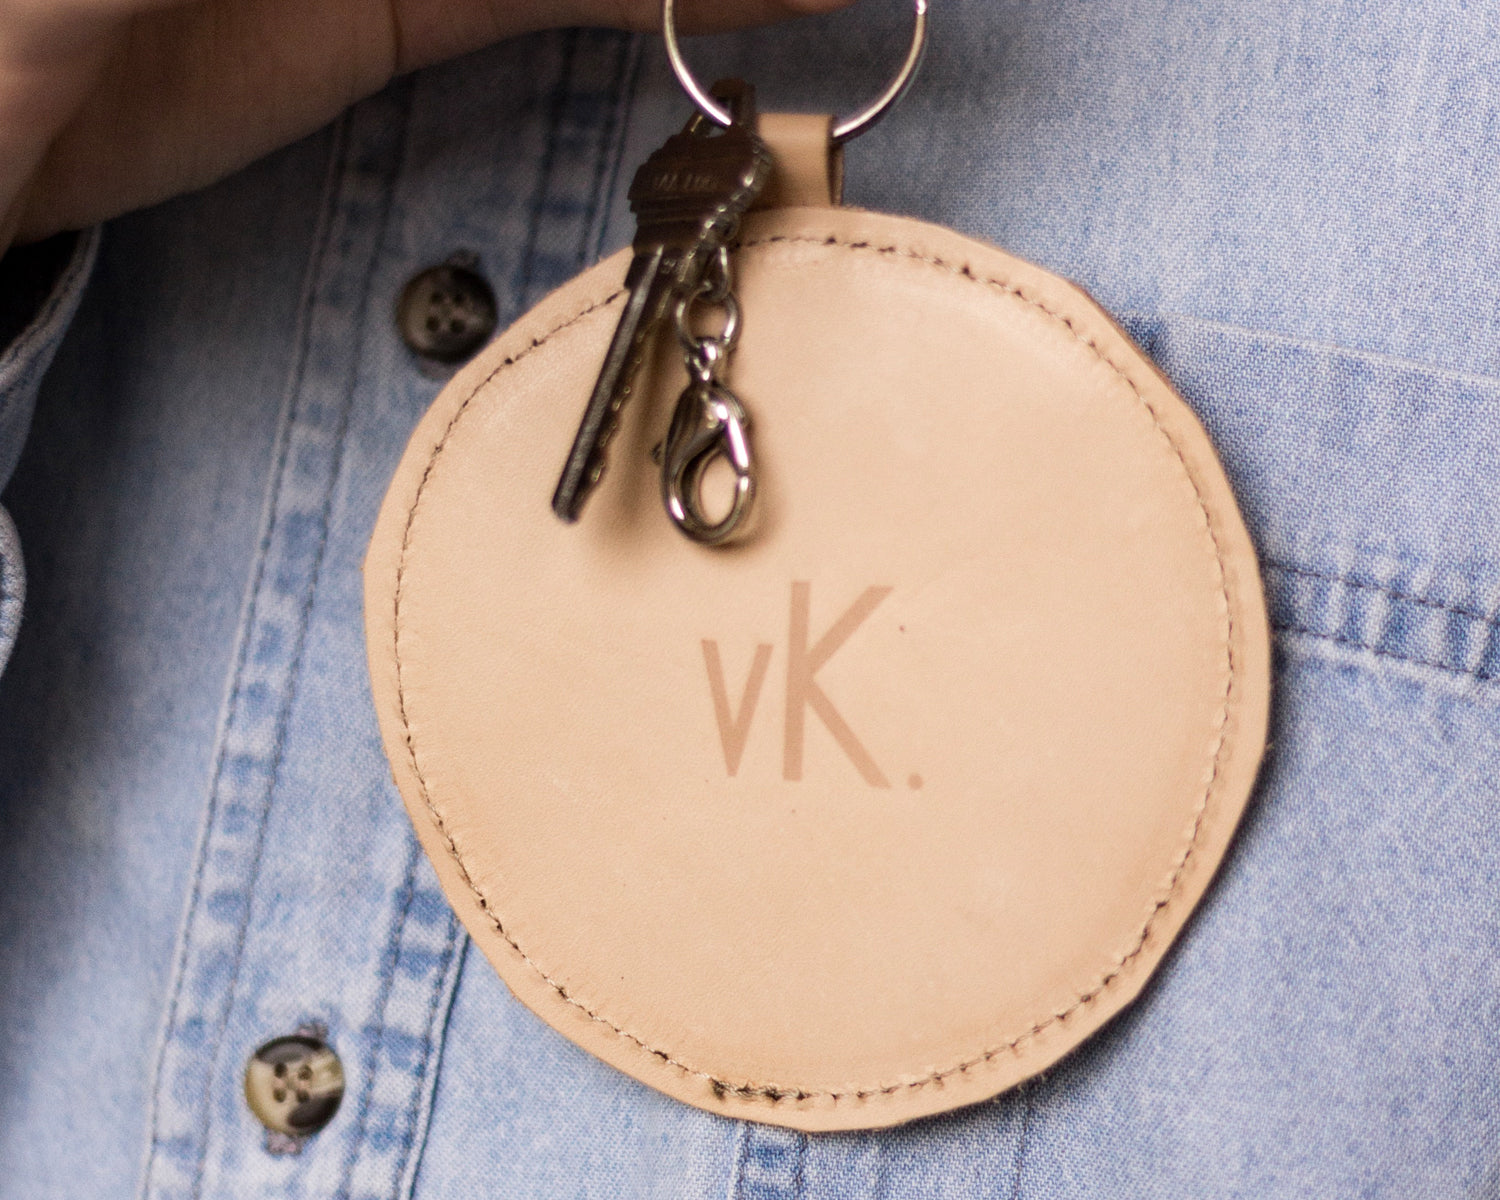 vK. Circle Keychain - NAT